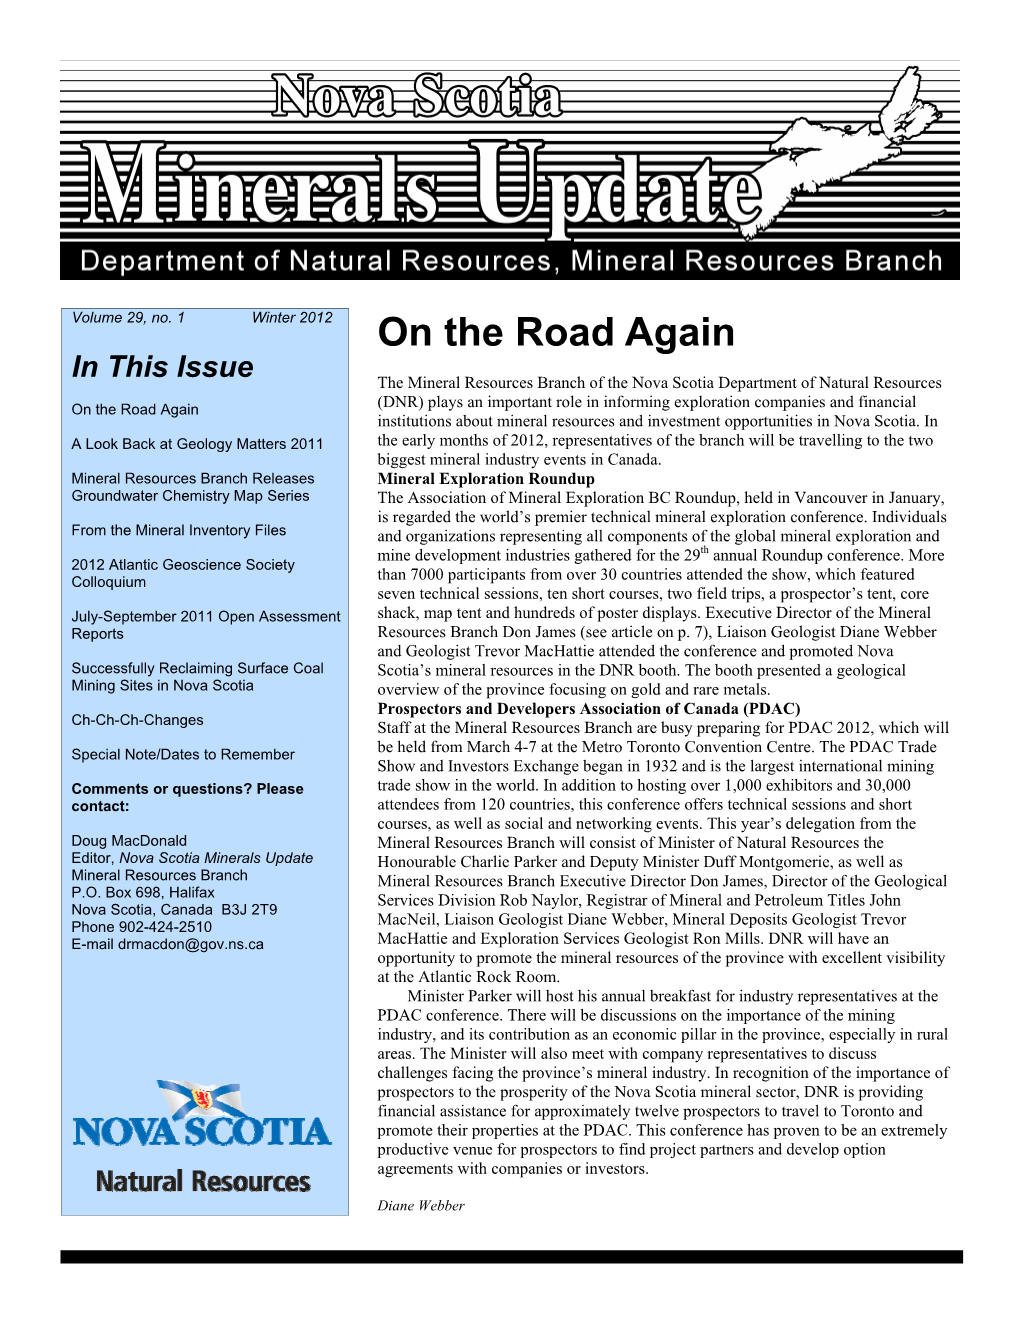 NSDNR, MRB, Nova Scotia Minerals Update, V. 29, N. 1